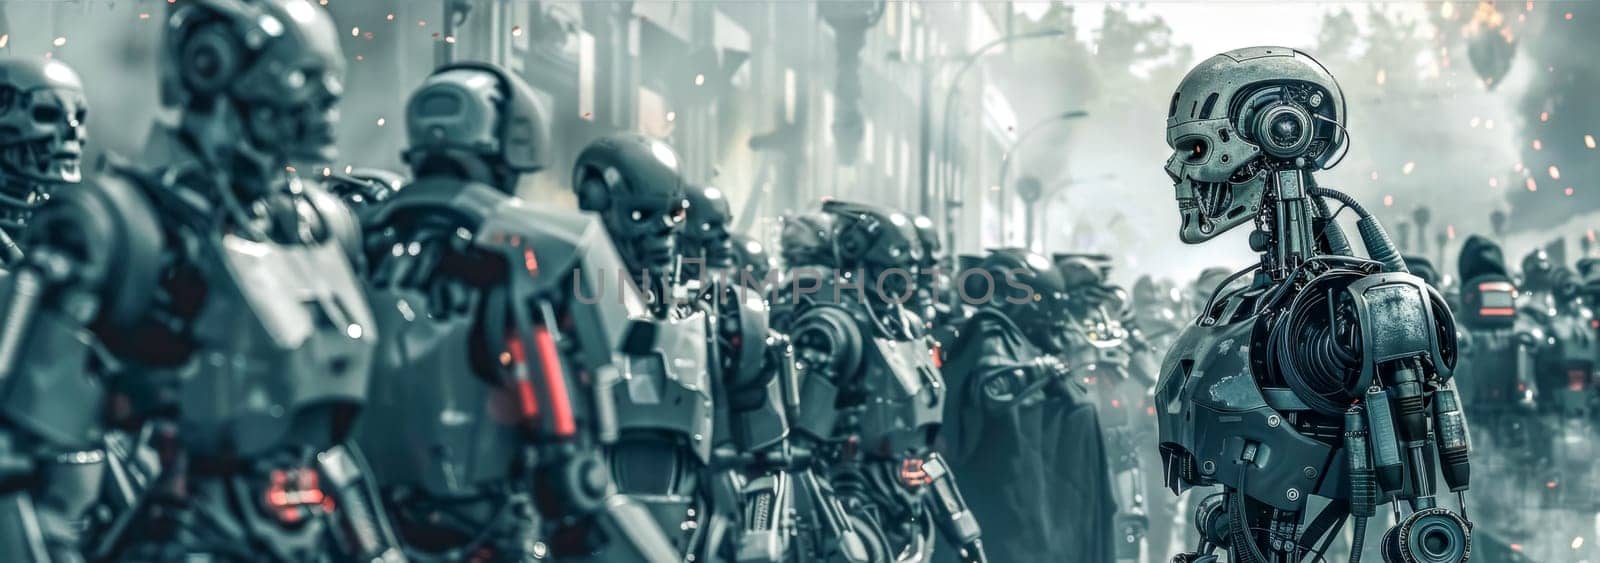 Futuristic robot rebellion on city streets by Edophoto